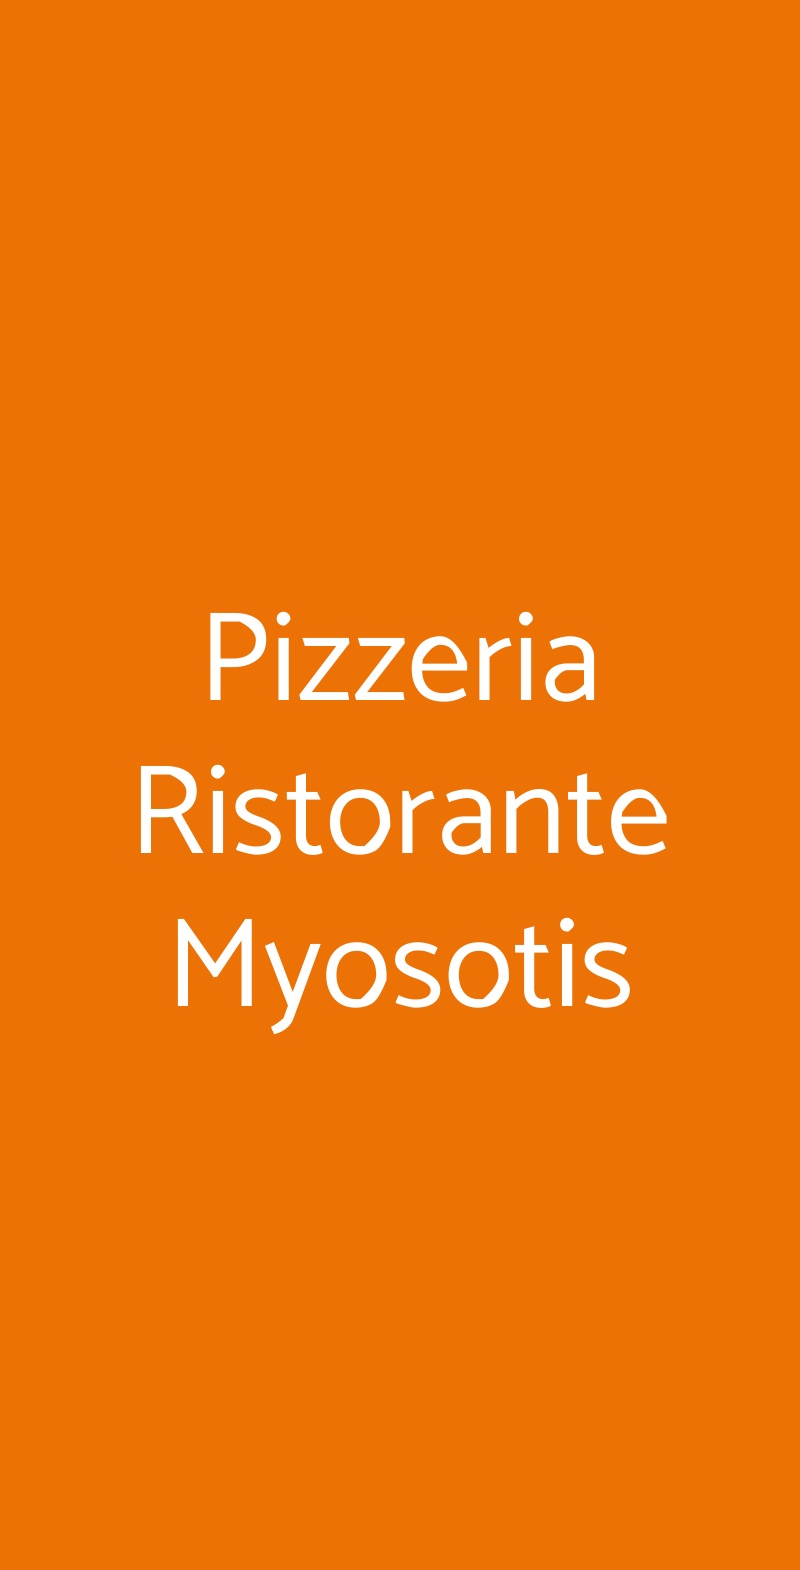 Pizzeria Ristorante Myosotis Mirano menù 1 pagina